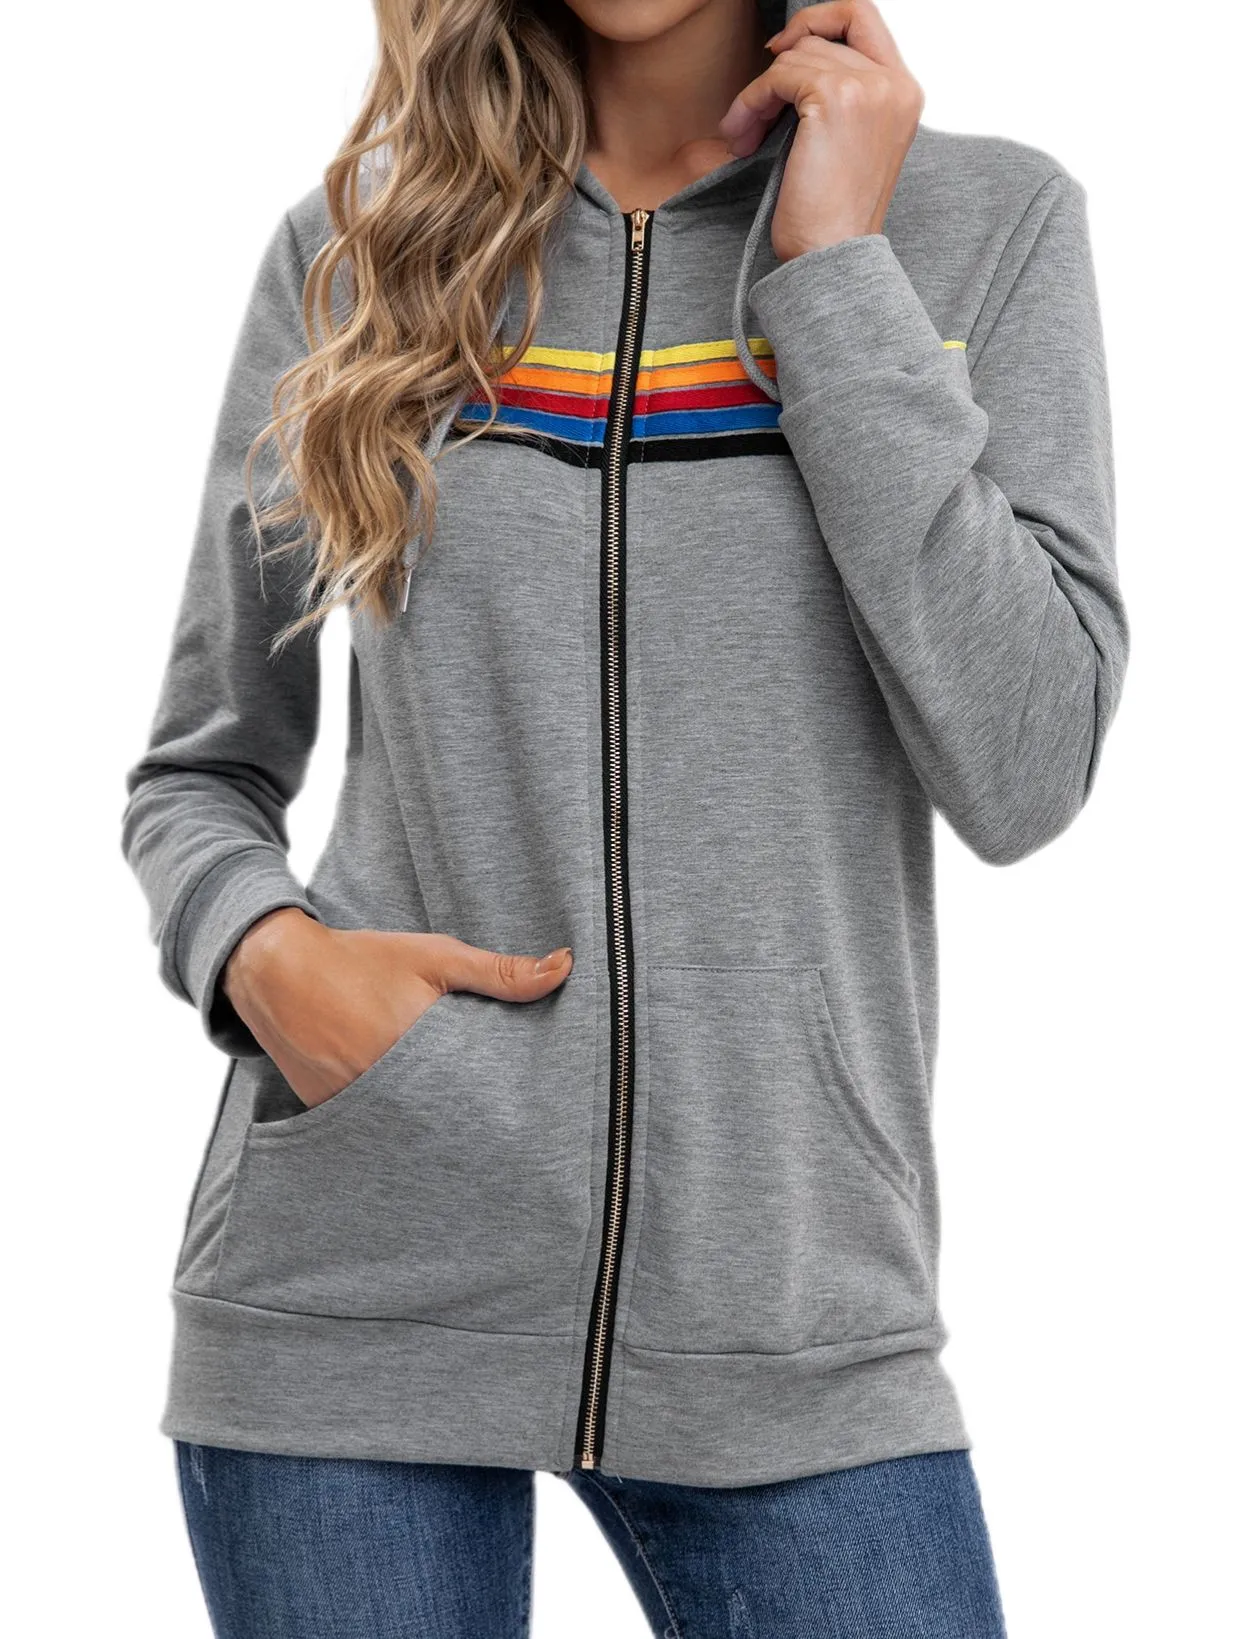 Women`s Hoodies & Sweatshirts Women Fashion Hoodie Oversized Rainbow Stripe Long Sleeve Sweatshirt Zipper Pocket Coat Jacket Spring Casual